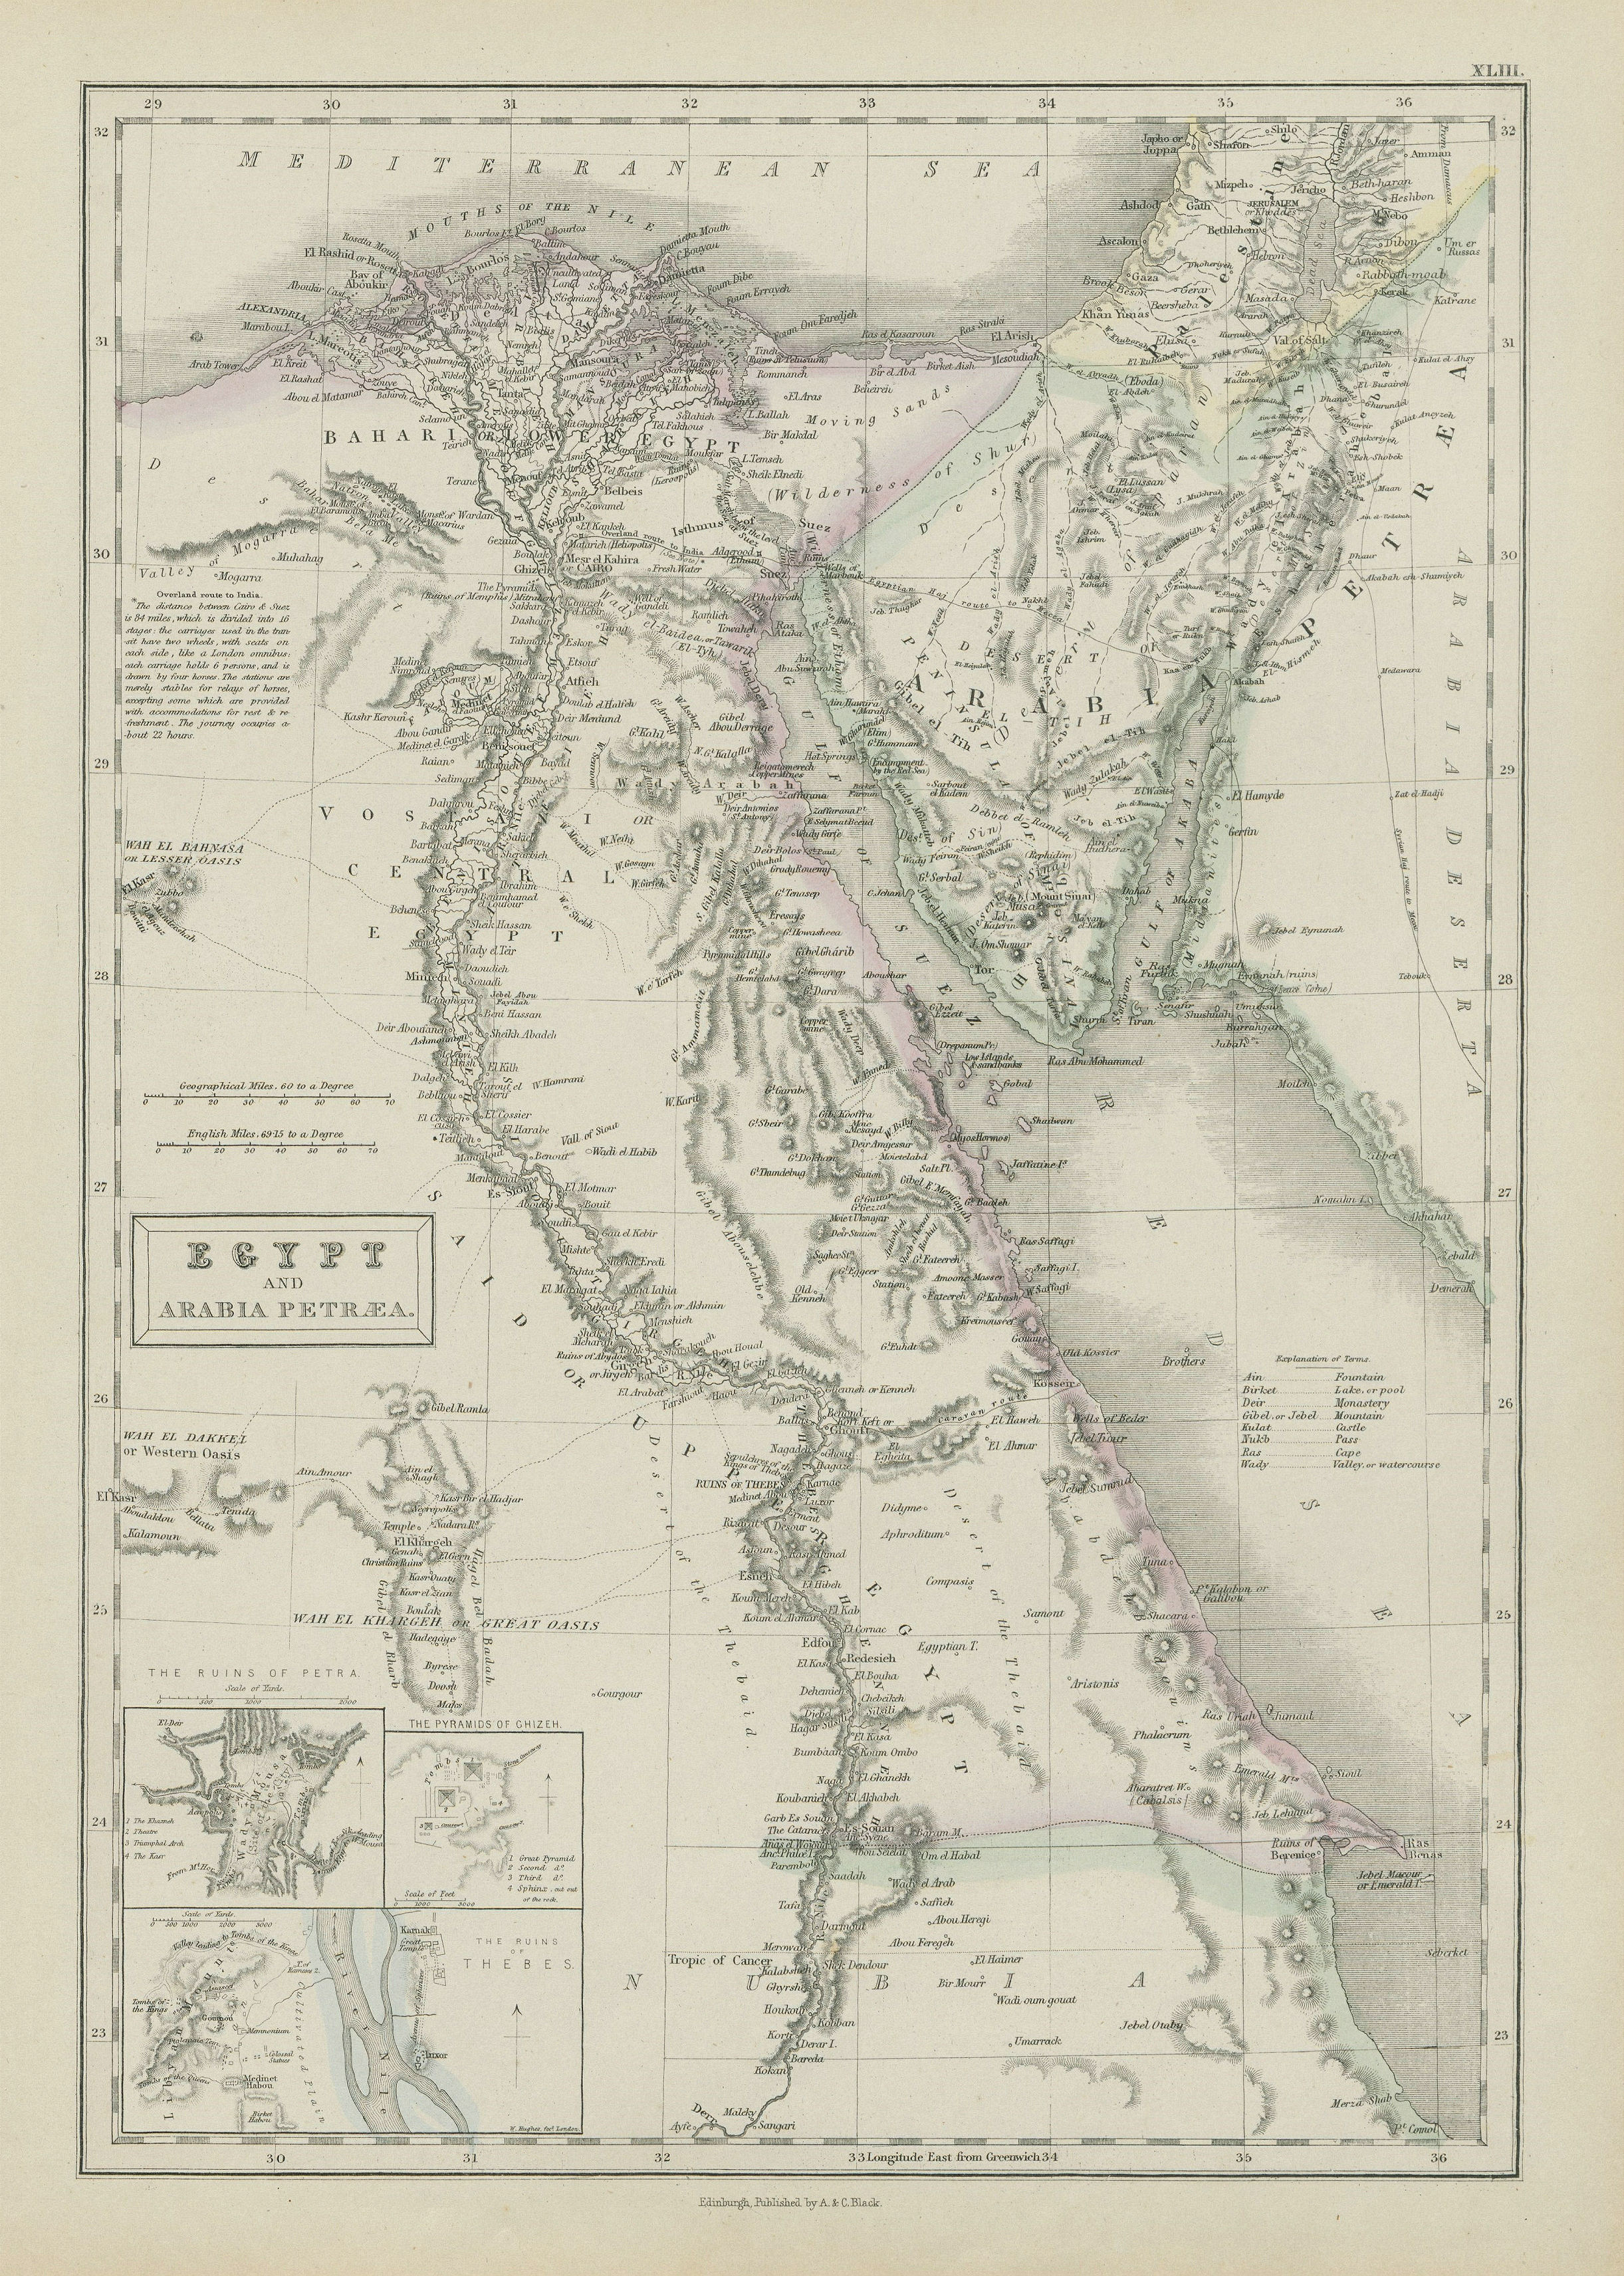 Egypt & Arabia Petraea. Insets Petra, Giza pyramids, Thebes ruins. HALL 1856 map